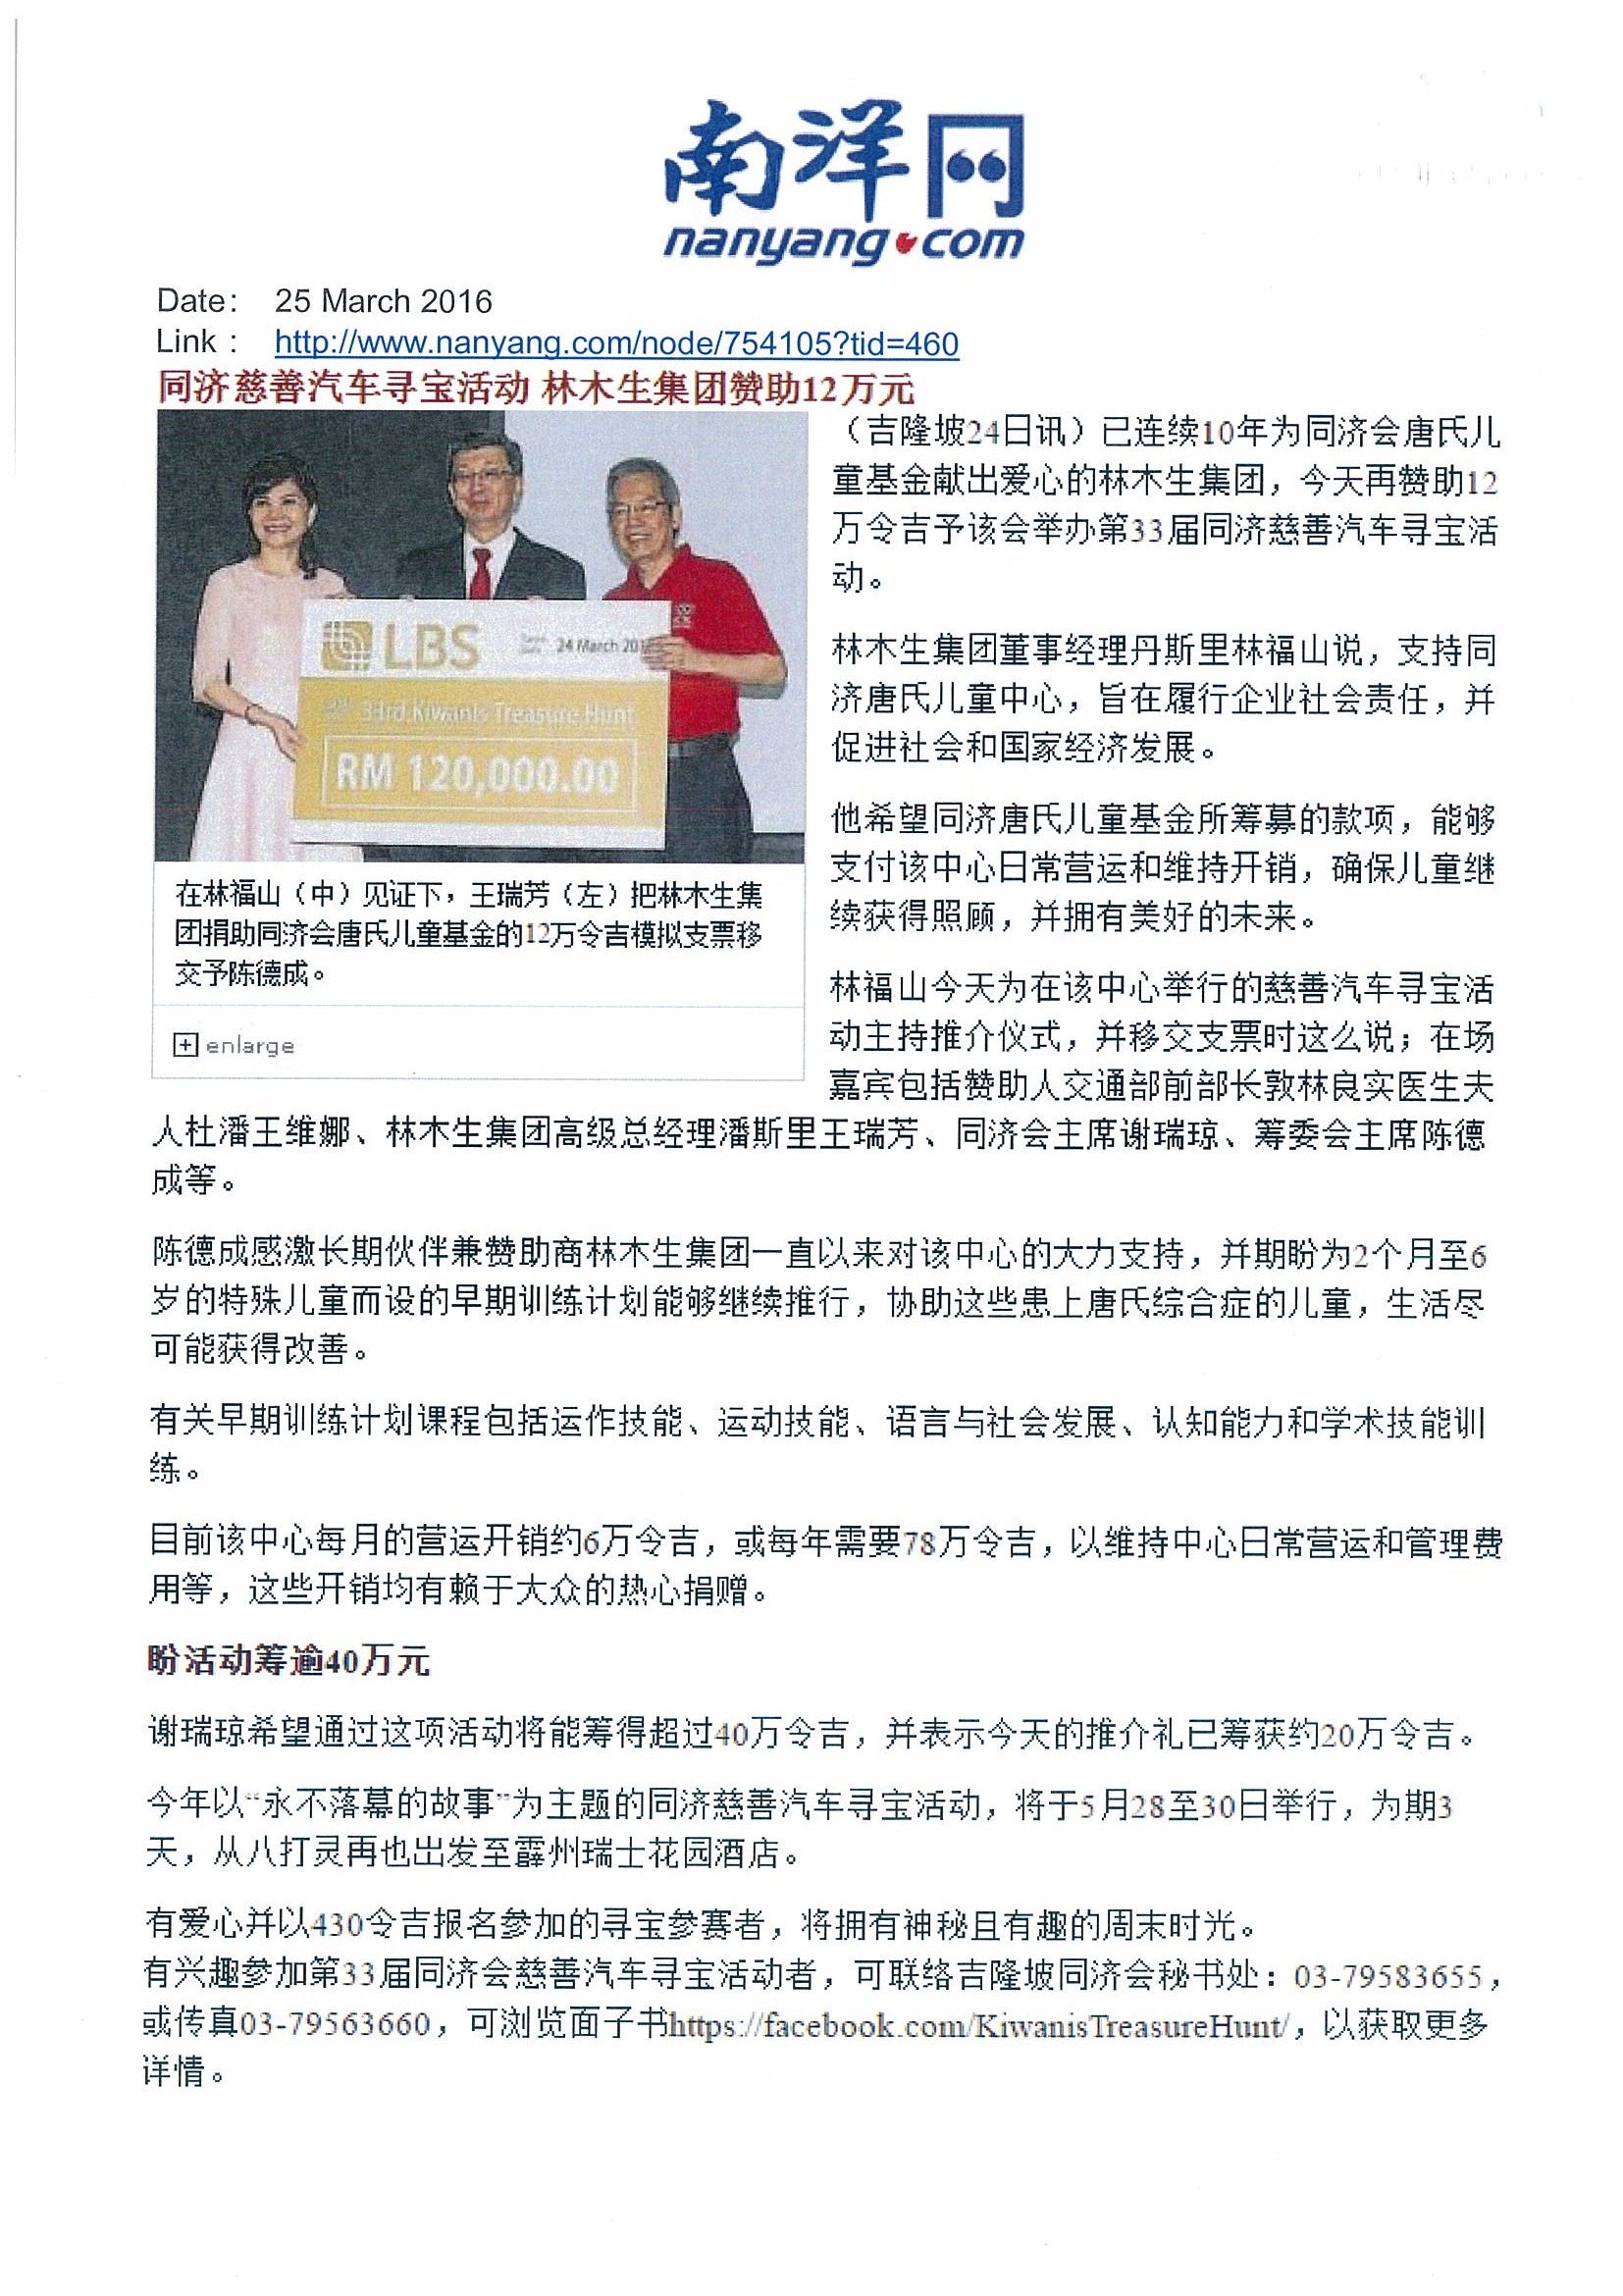 2016.03.25 Nanyang Online – LBS Bina Group sponsor RM120,000 for the Kiwanis treasure hunt event